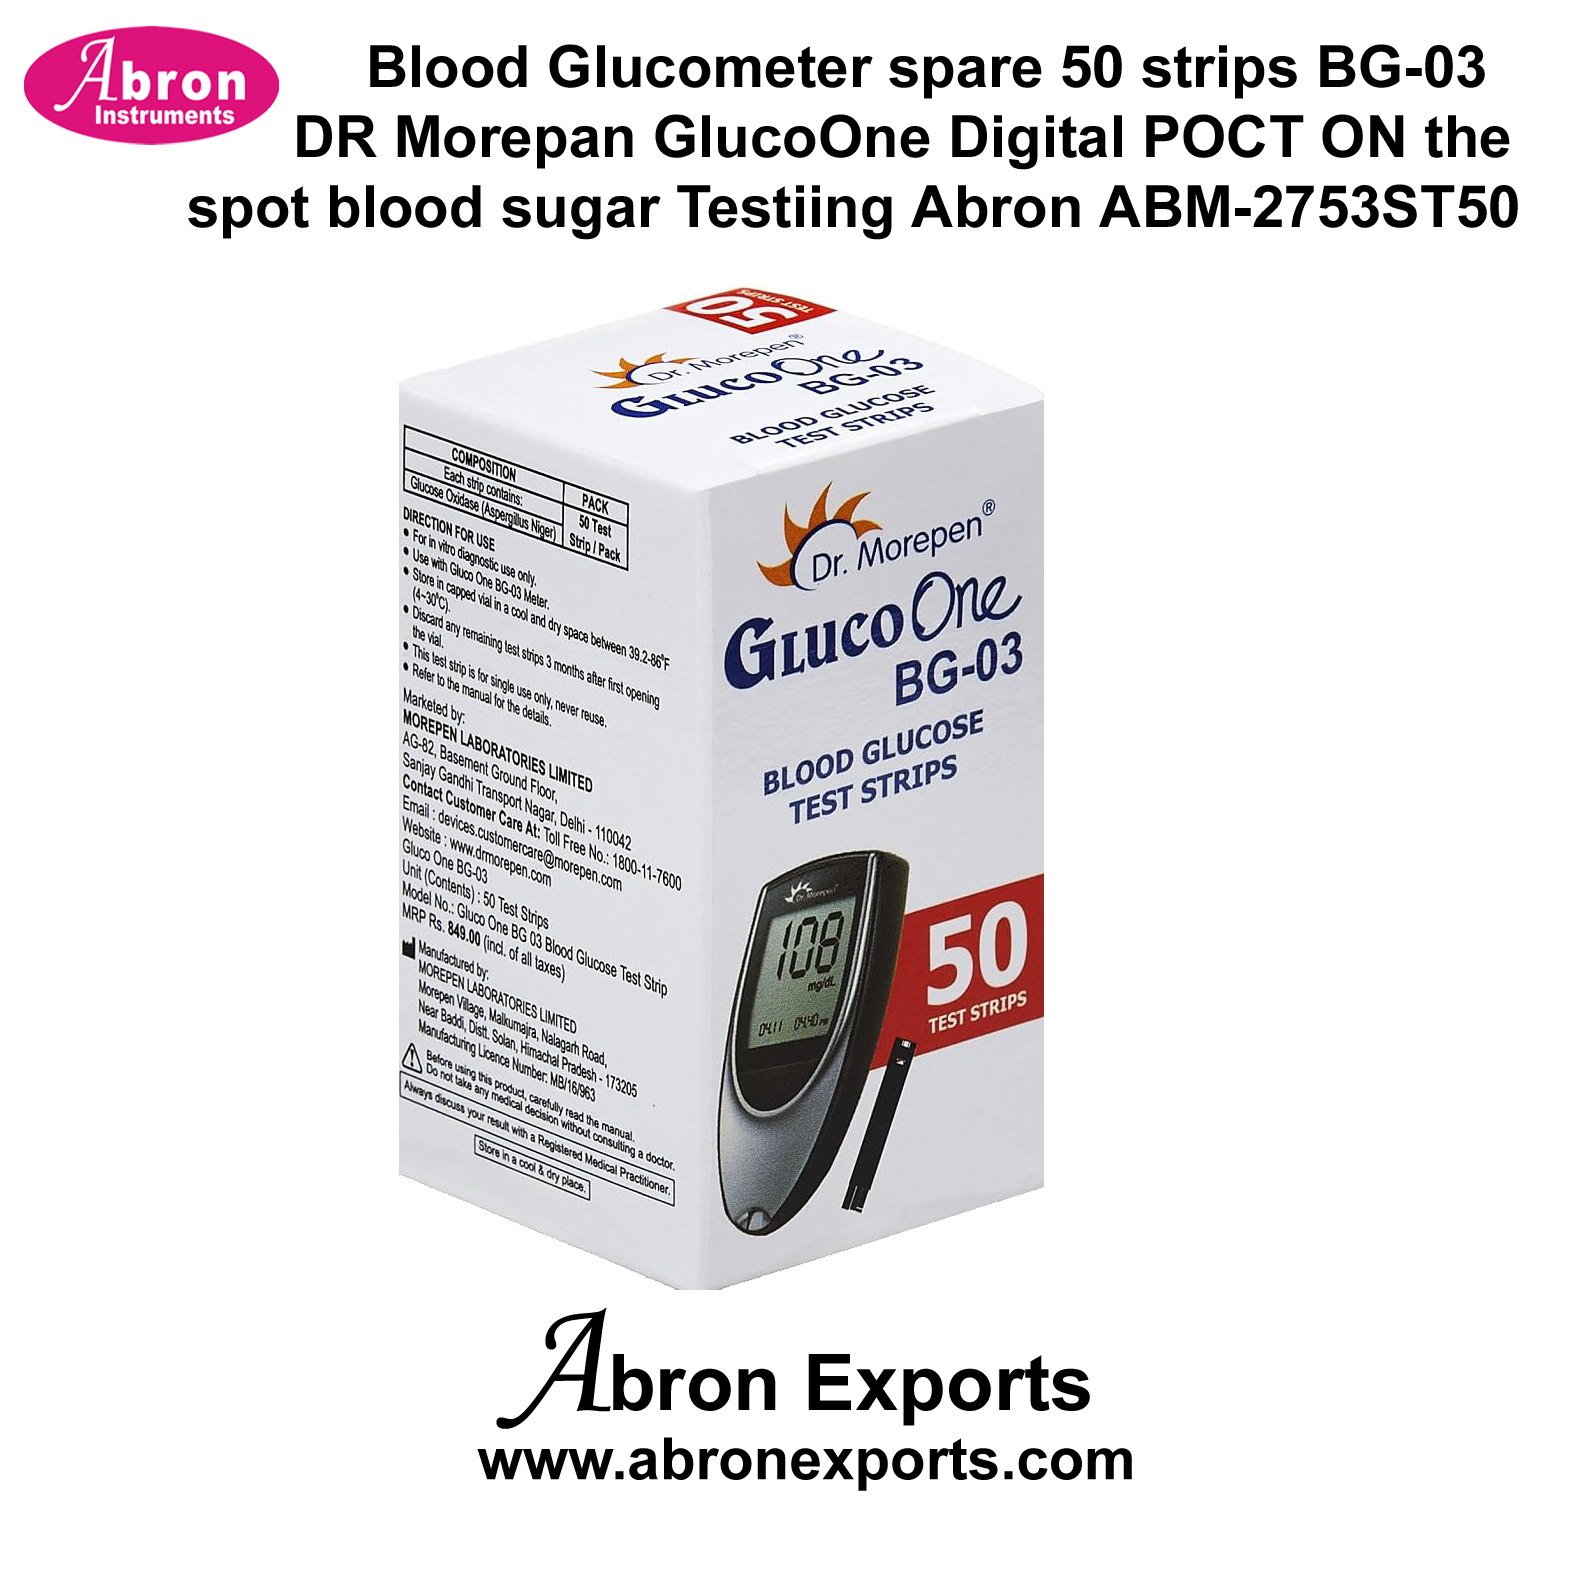 Blood Glucometer spare 50 strips BG-03 DR Morepan GlucoOne Digital POCT ON the spot blood sugar Testiing Abron ABM-2753ST50 